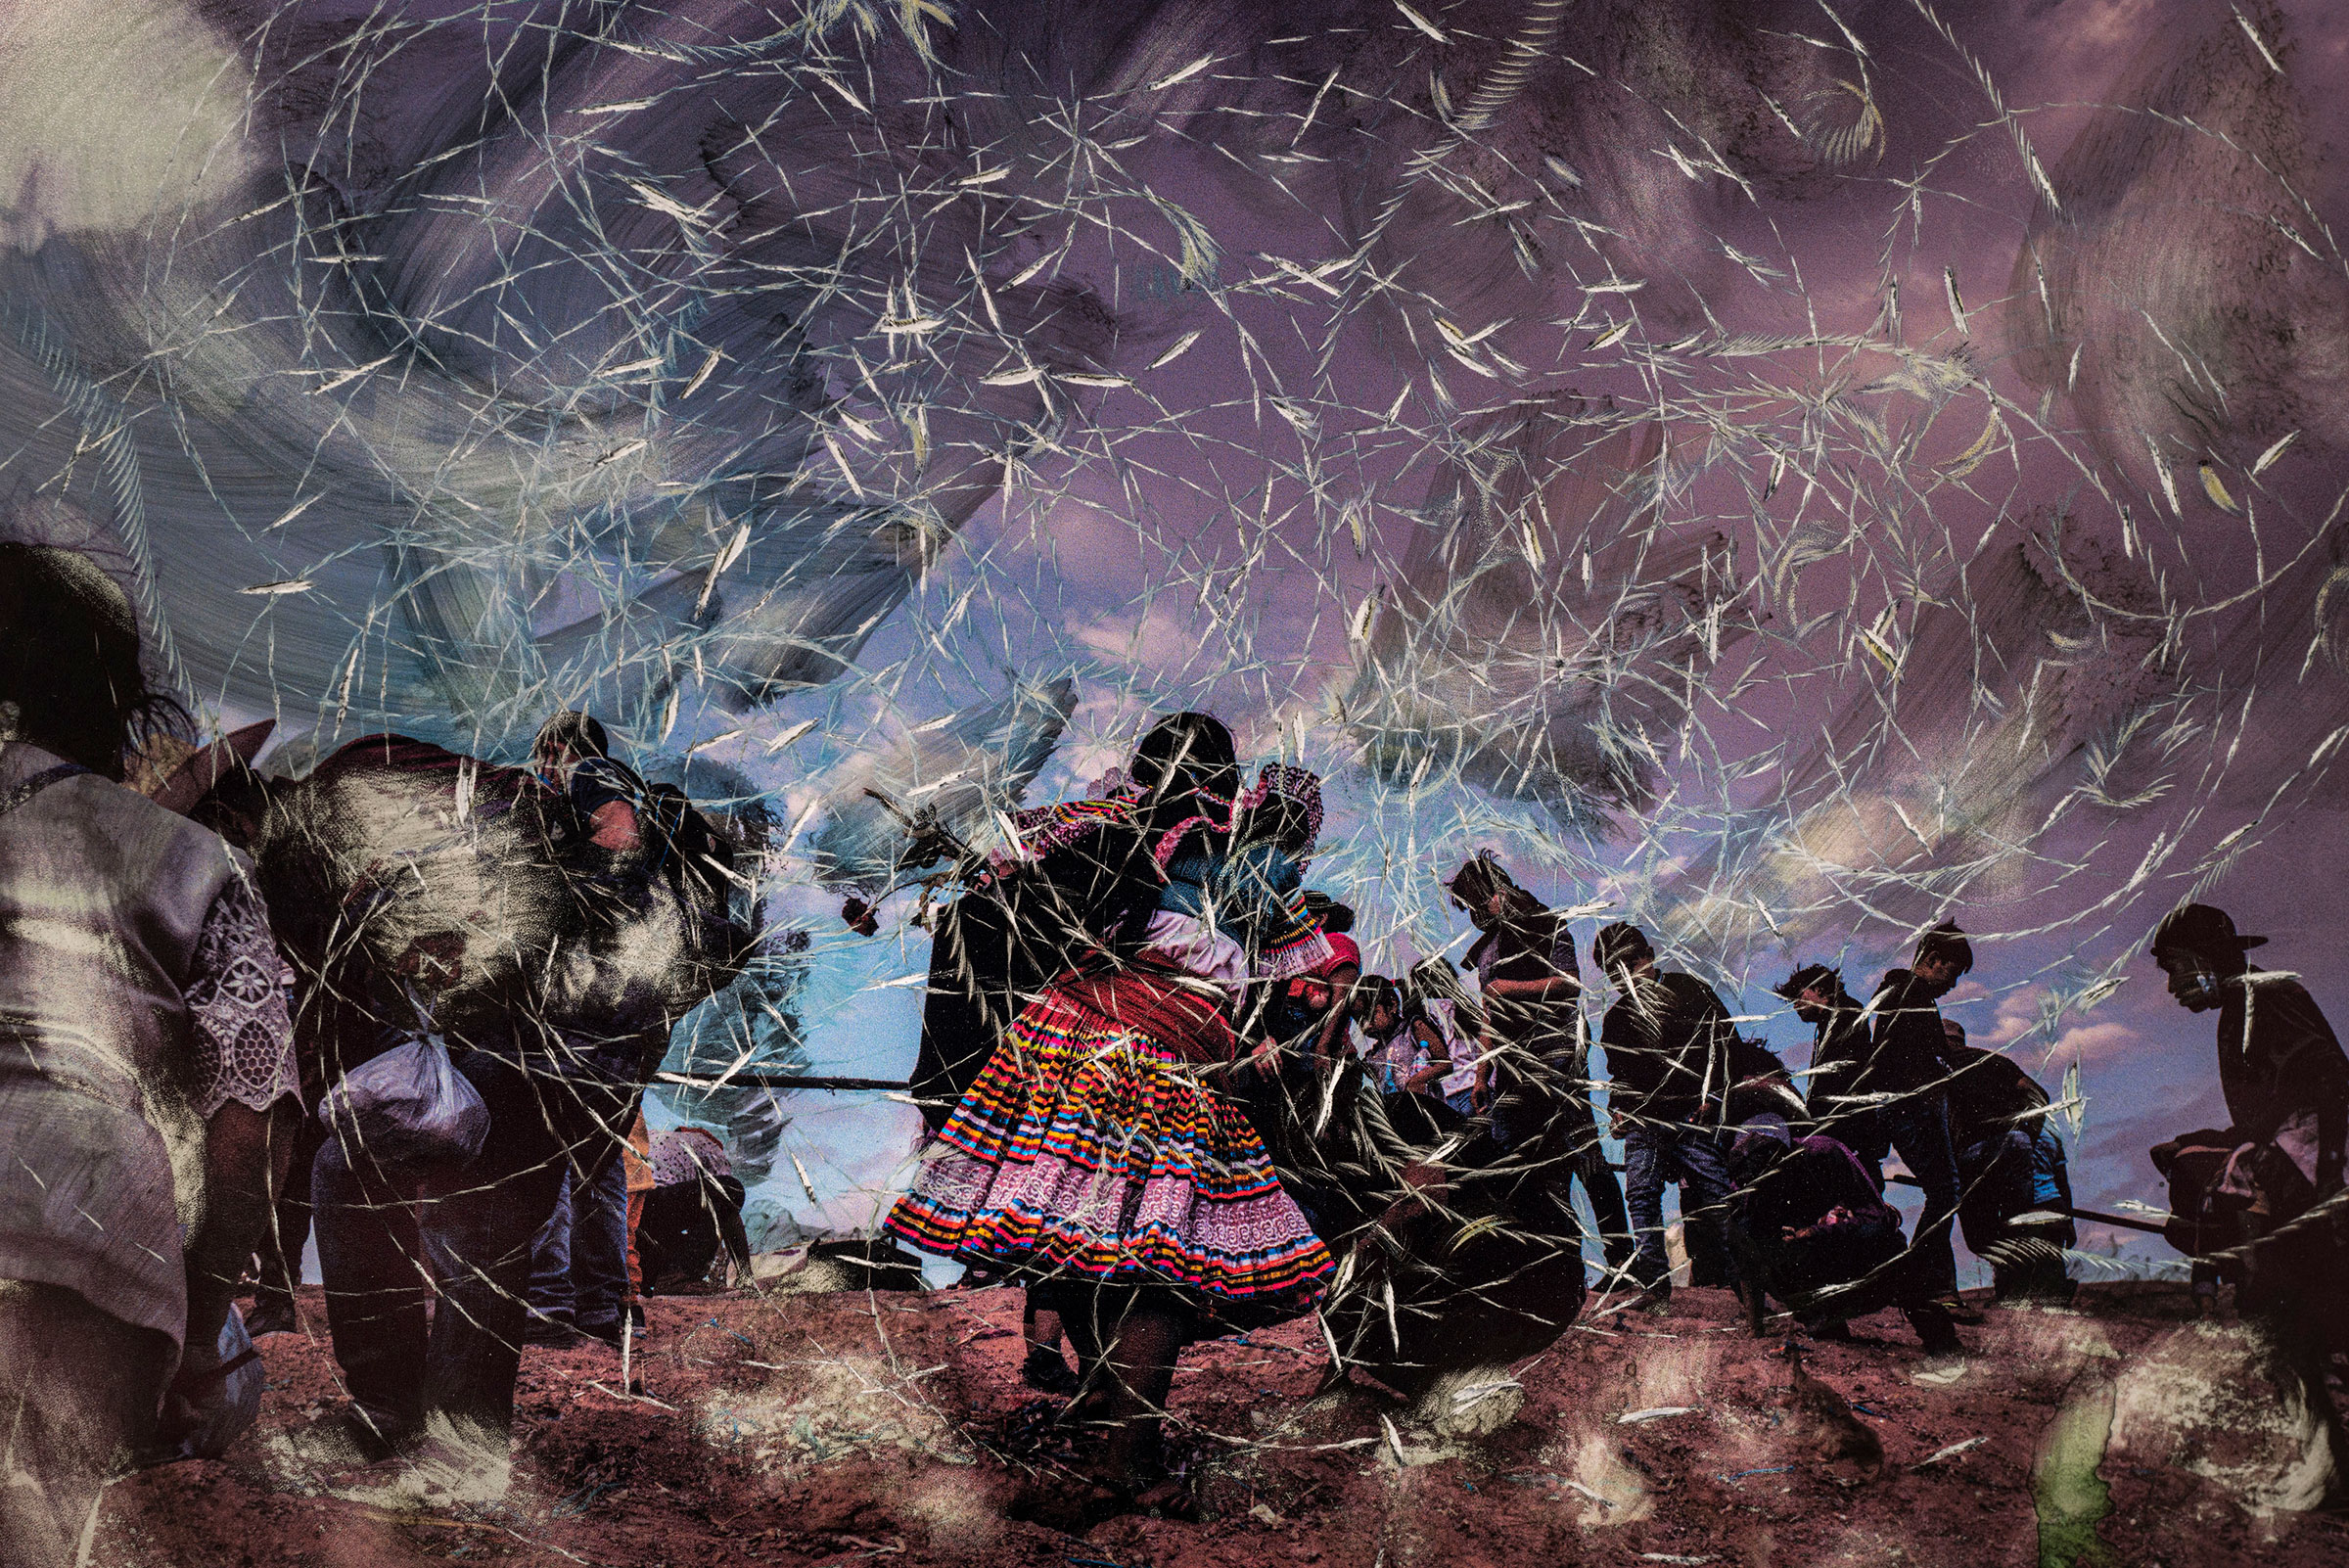 The Nahua community celebrating for the Maiz in Xalpatlahuac, Guerrero, Mexico, on March 27. (Yael Martinez—Magnum Photos)